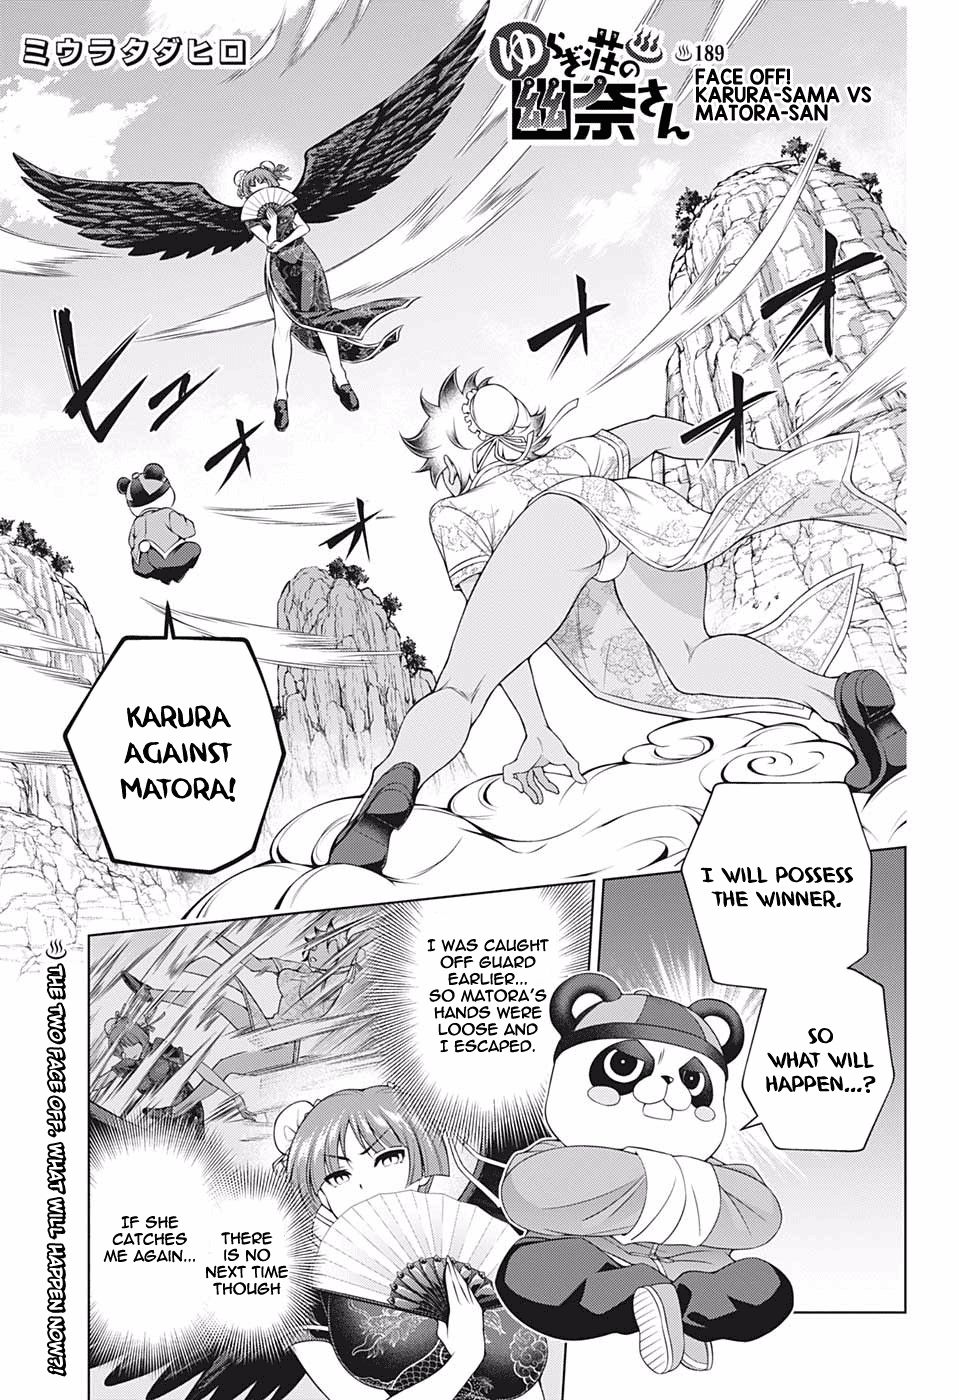 Yuuna and the Haunted Hot Springs Manga Online